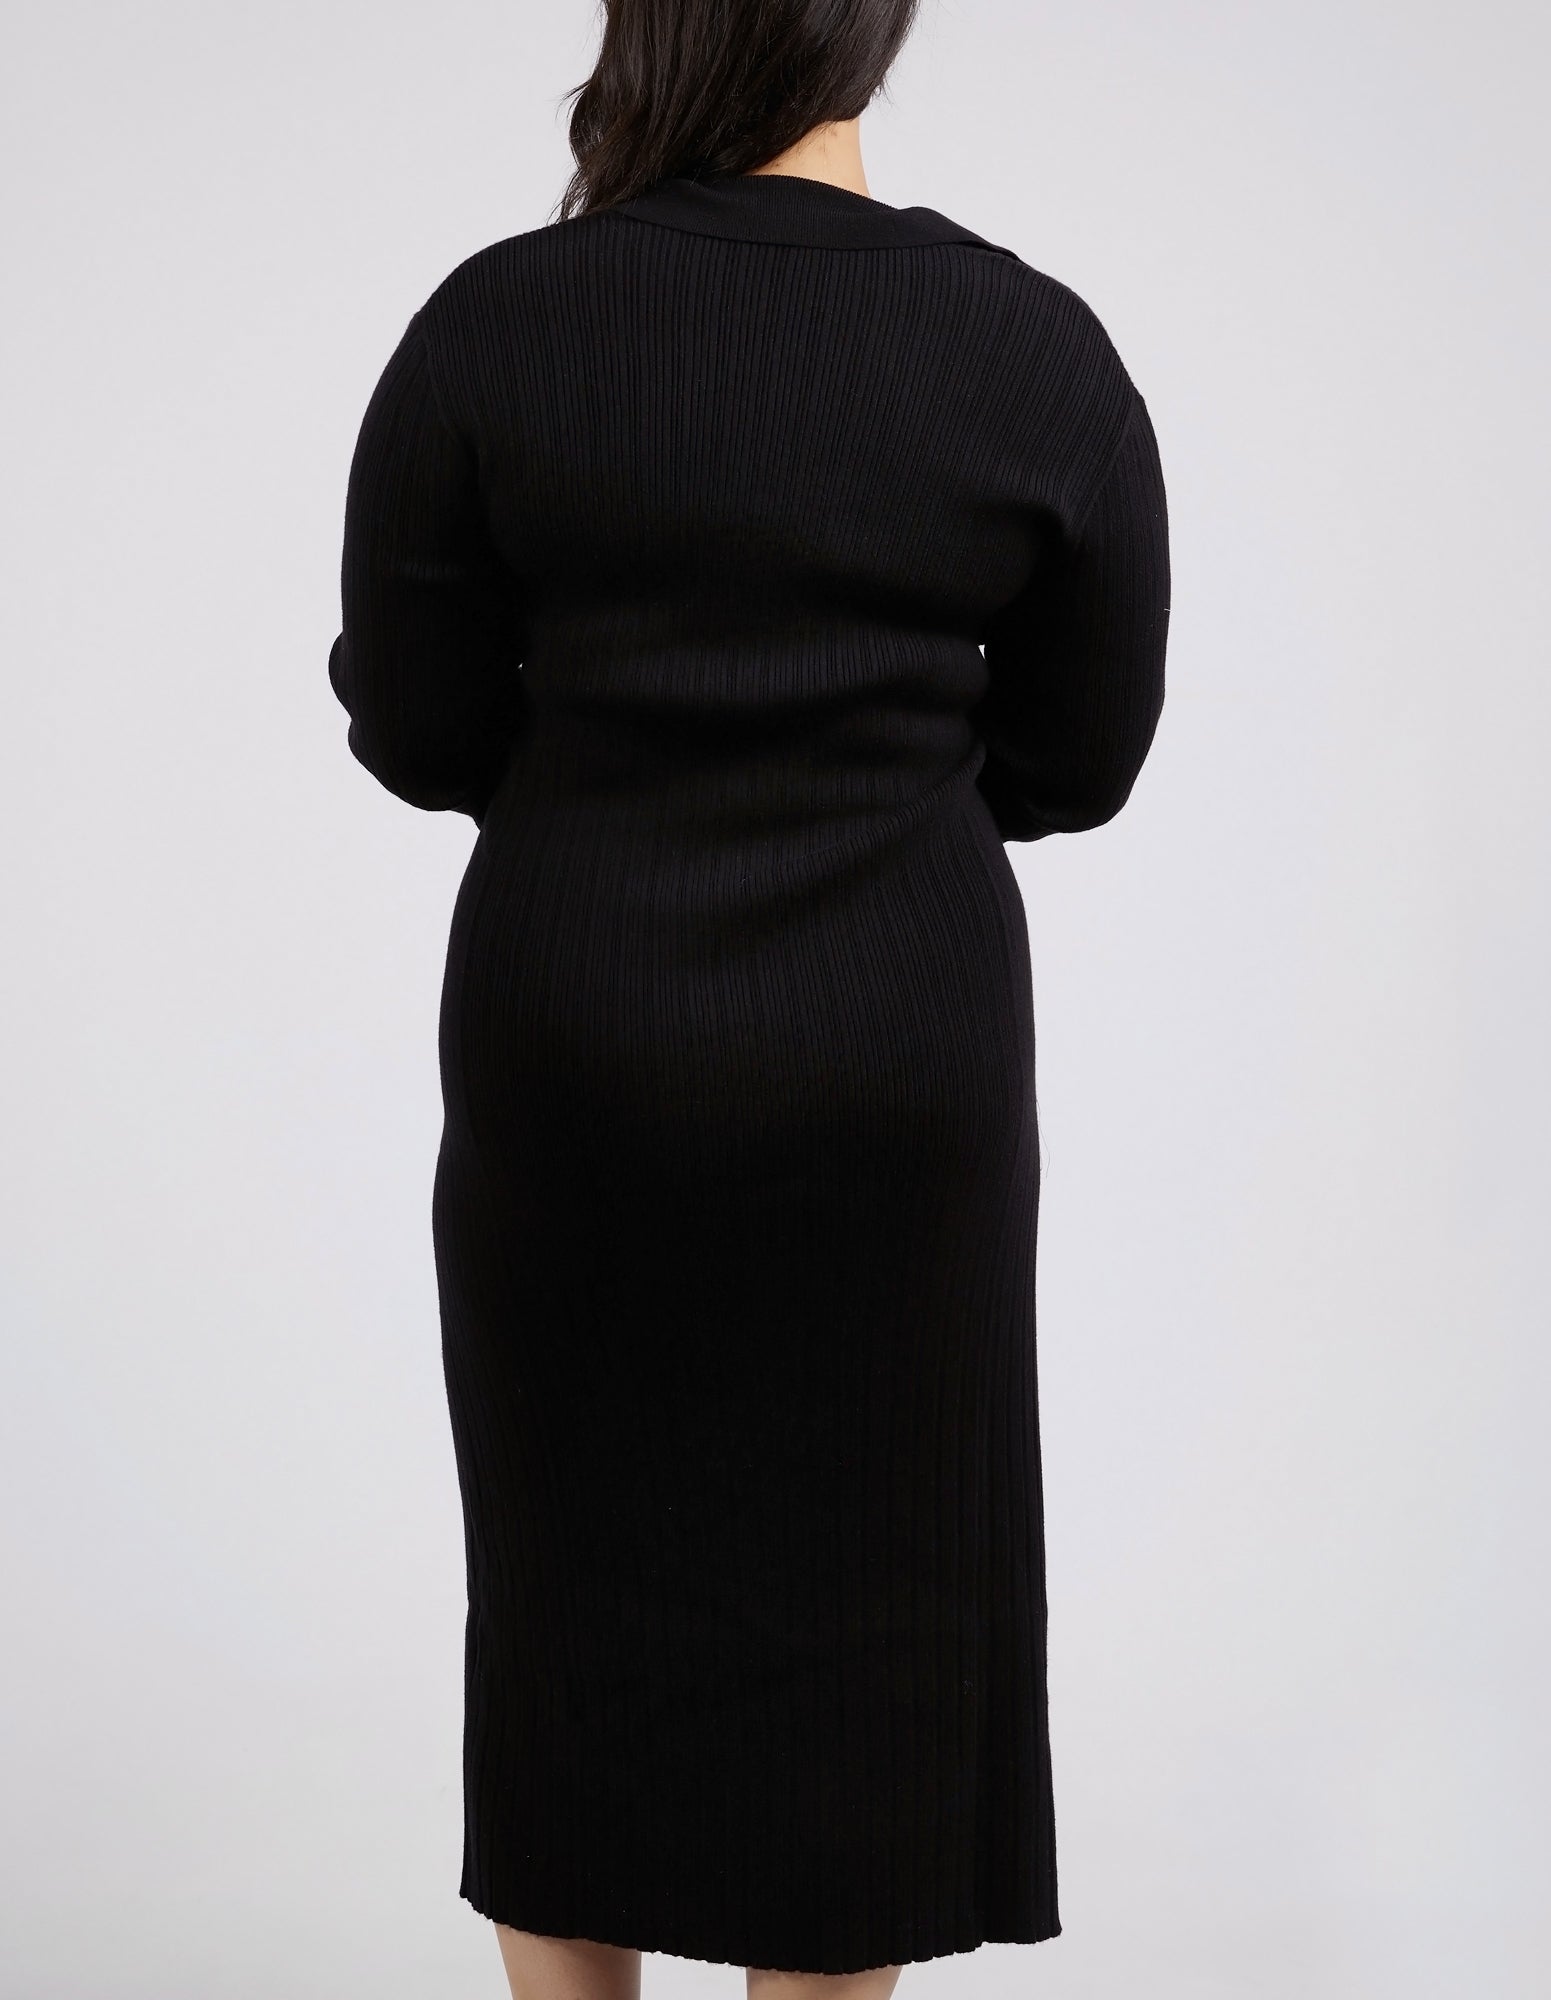 Maple Knit Dress Black